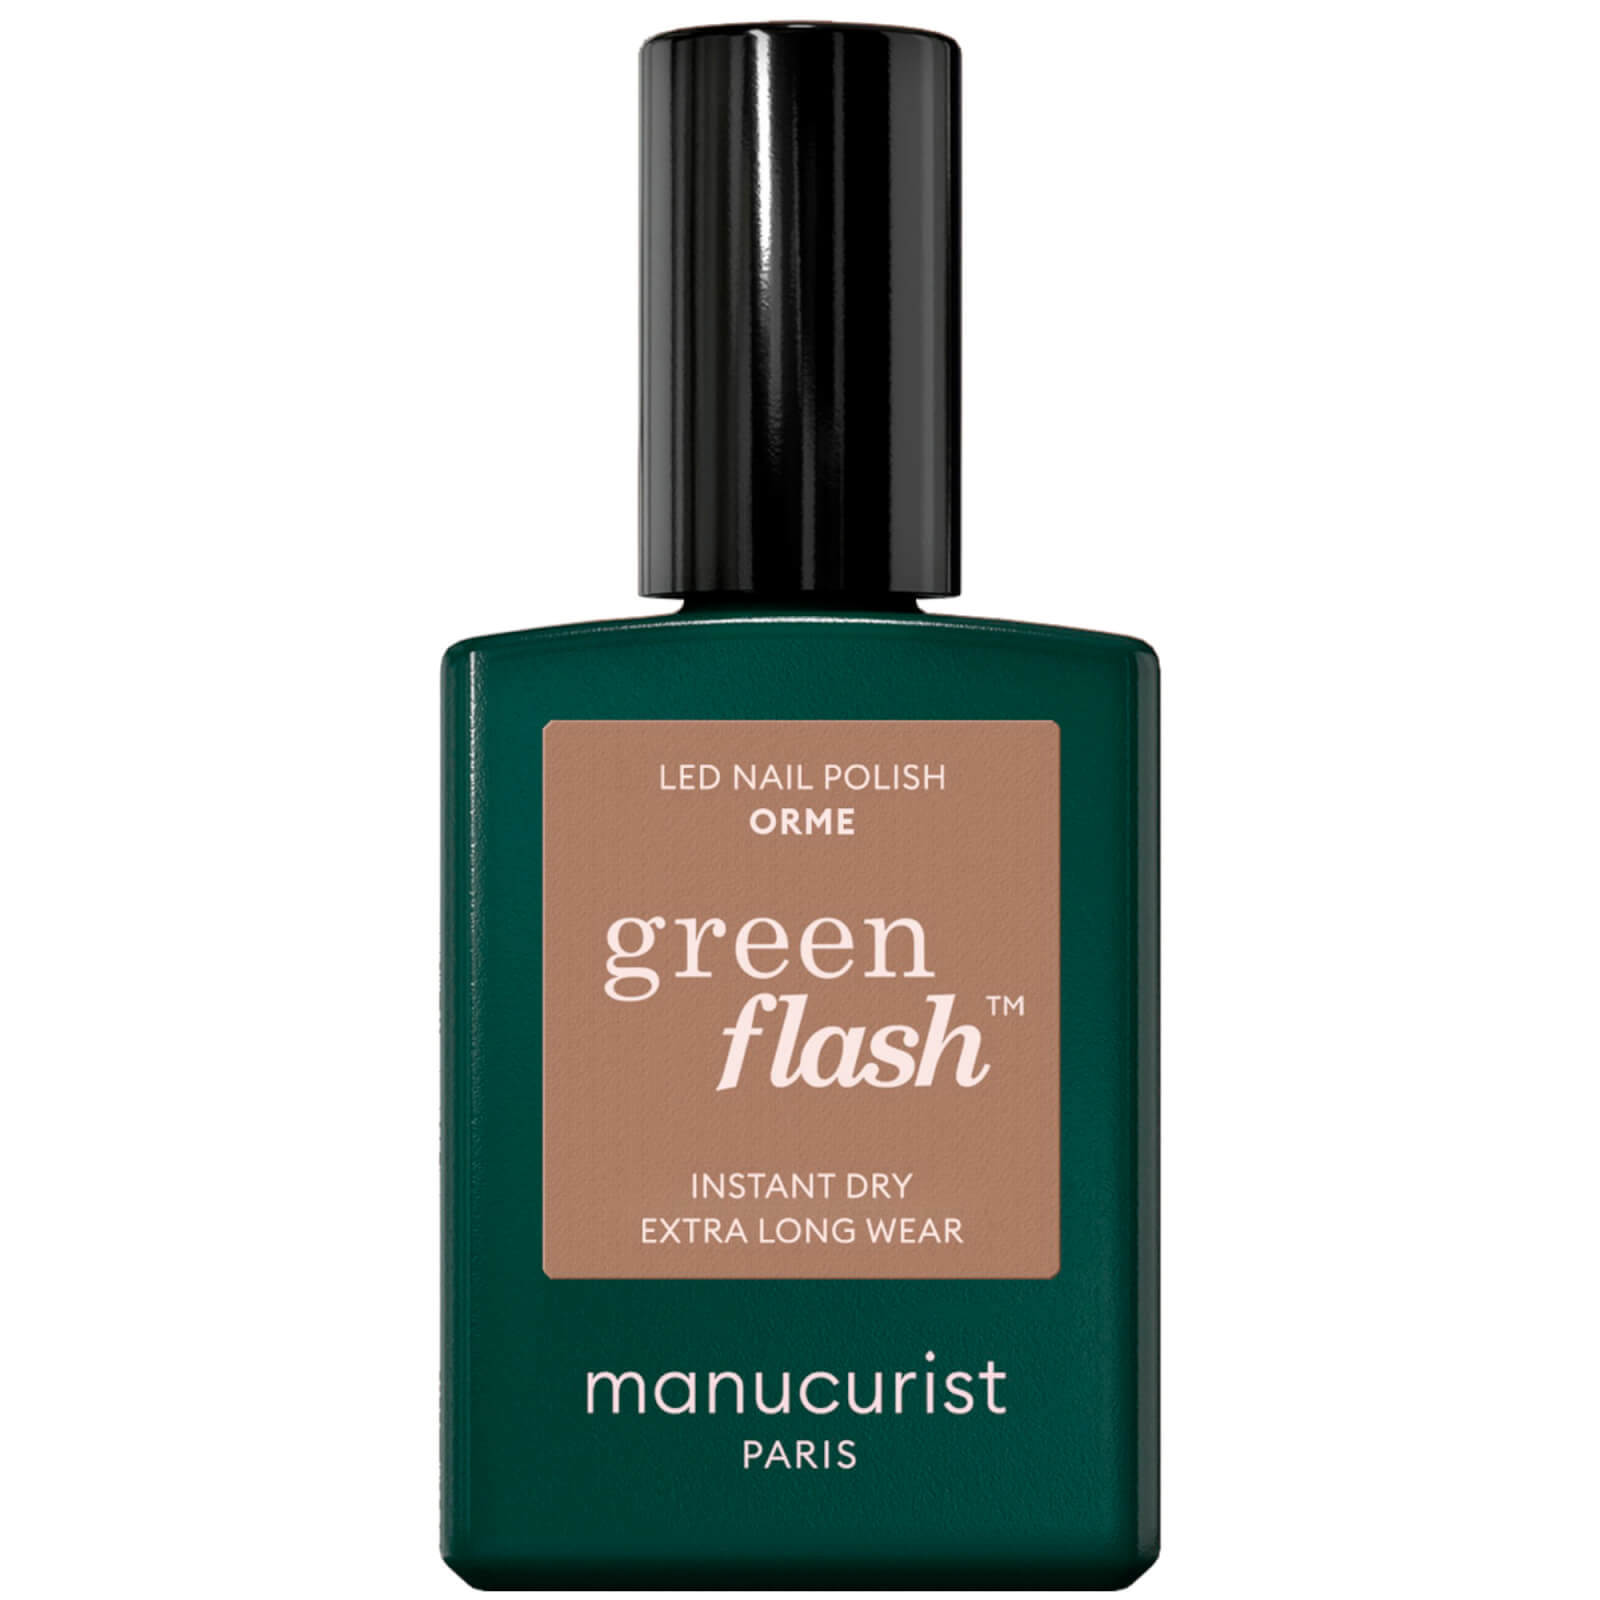 Manucurist Green Flash Varnish 15ml (various Shades) - Orme